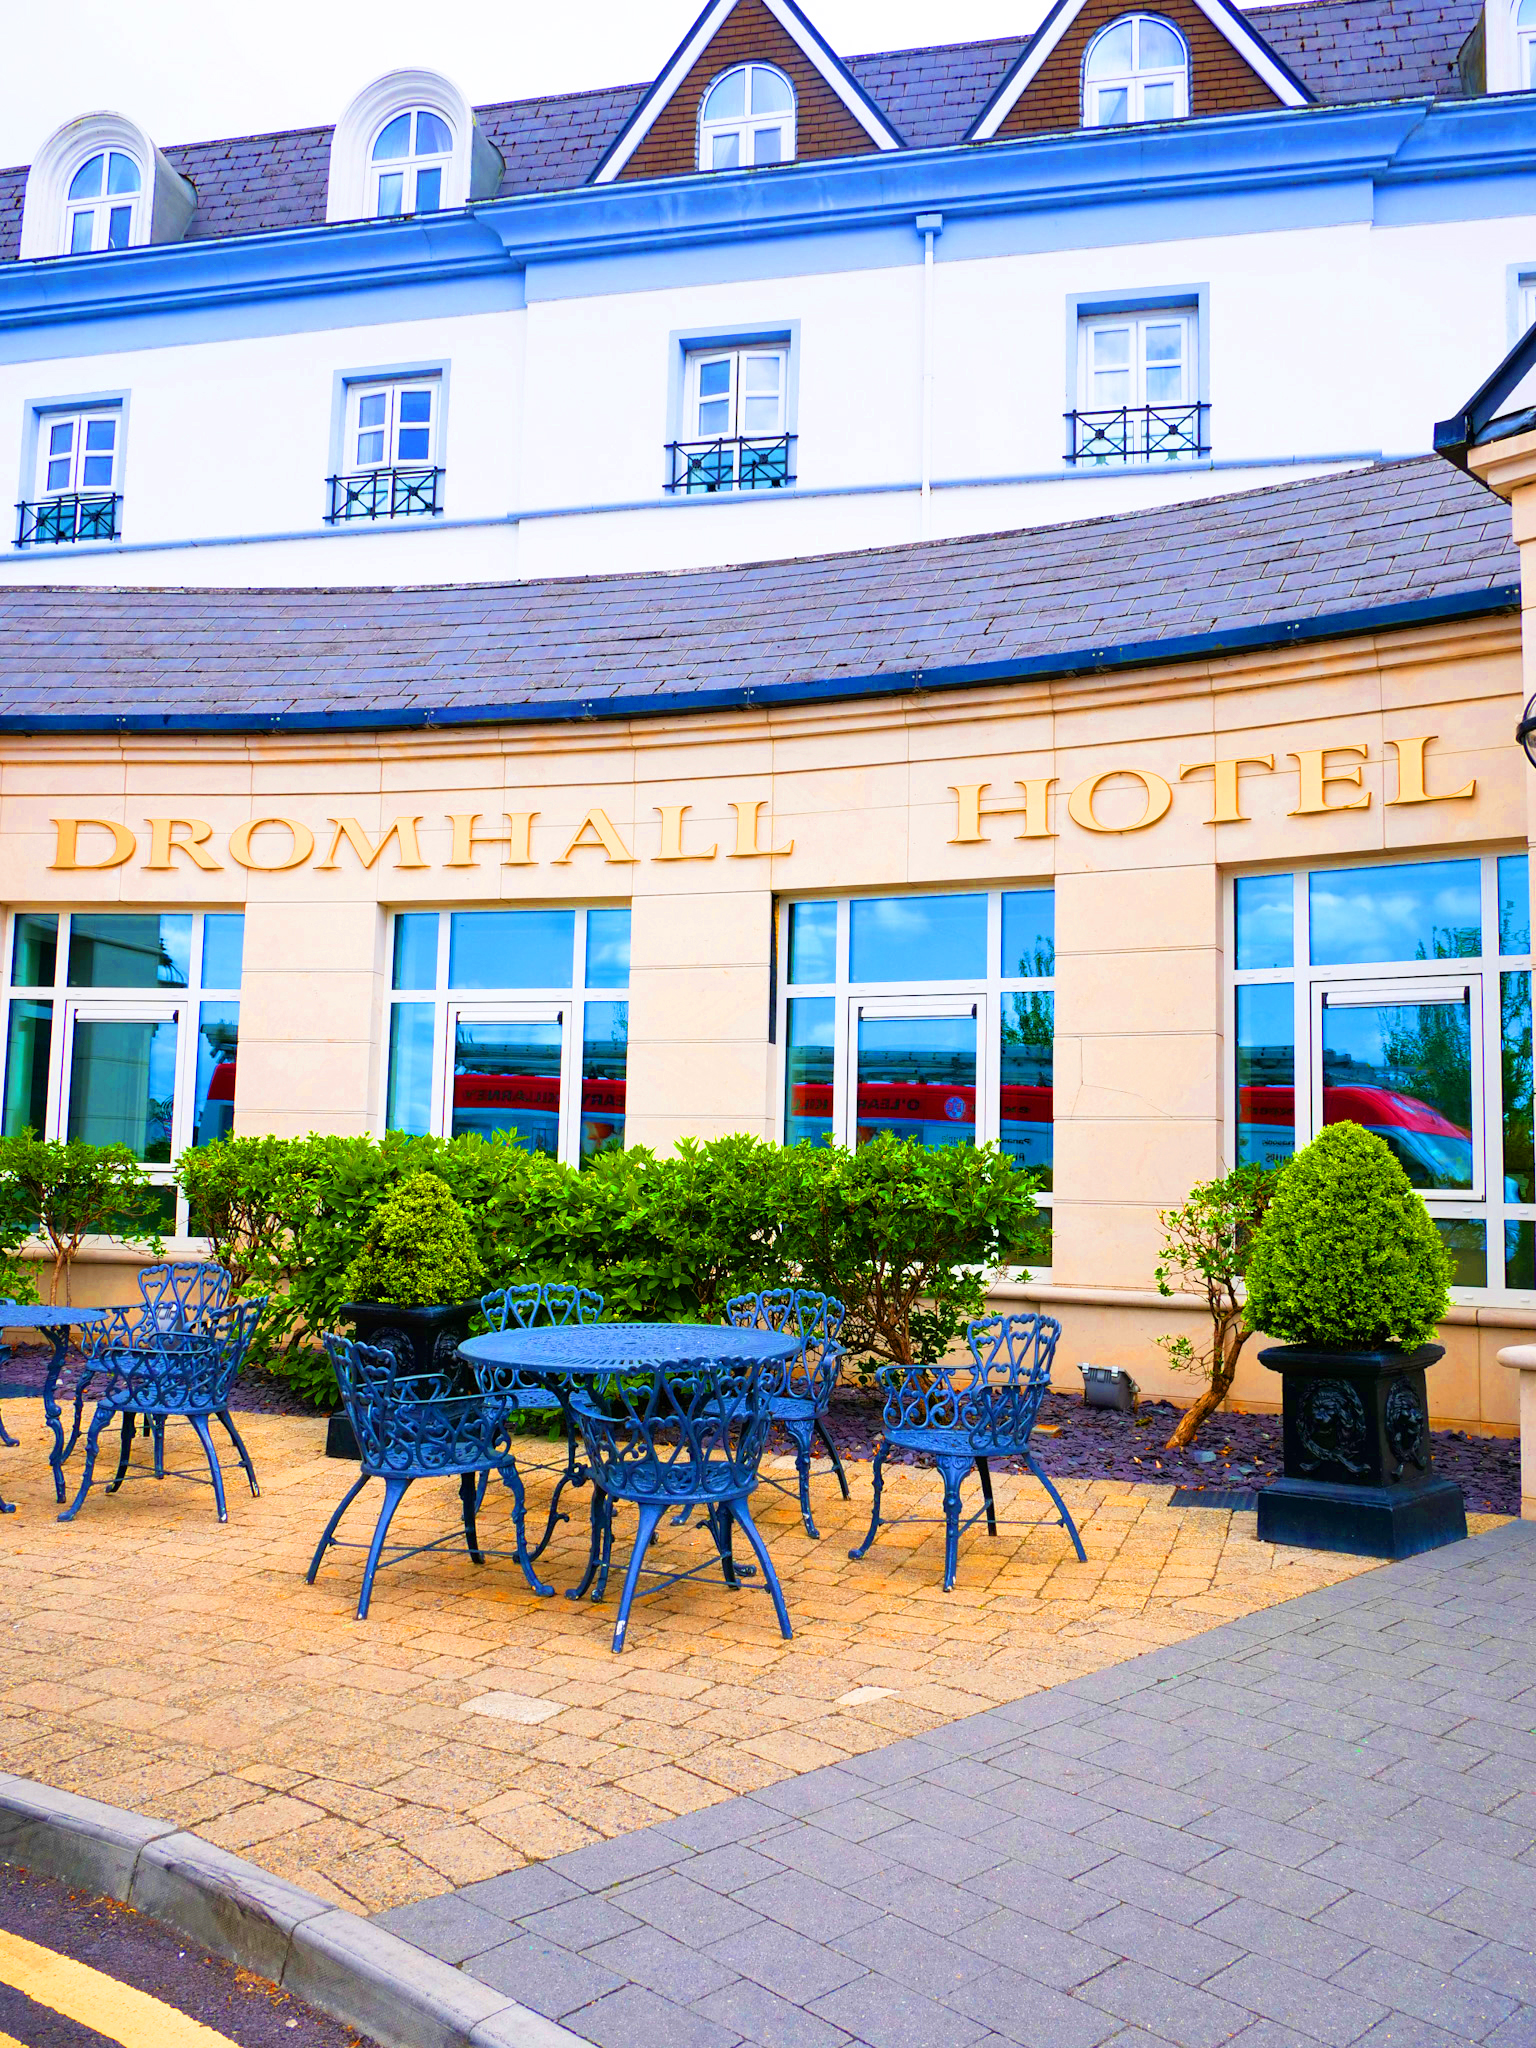 Dromhall Hotel, Killarney